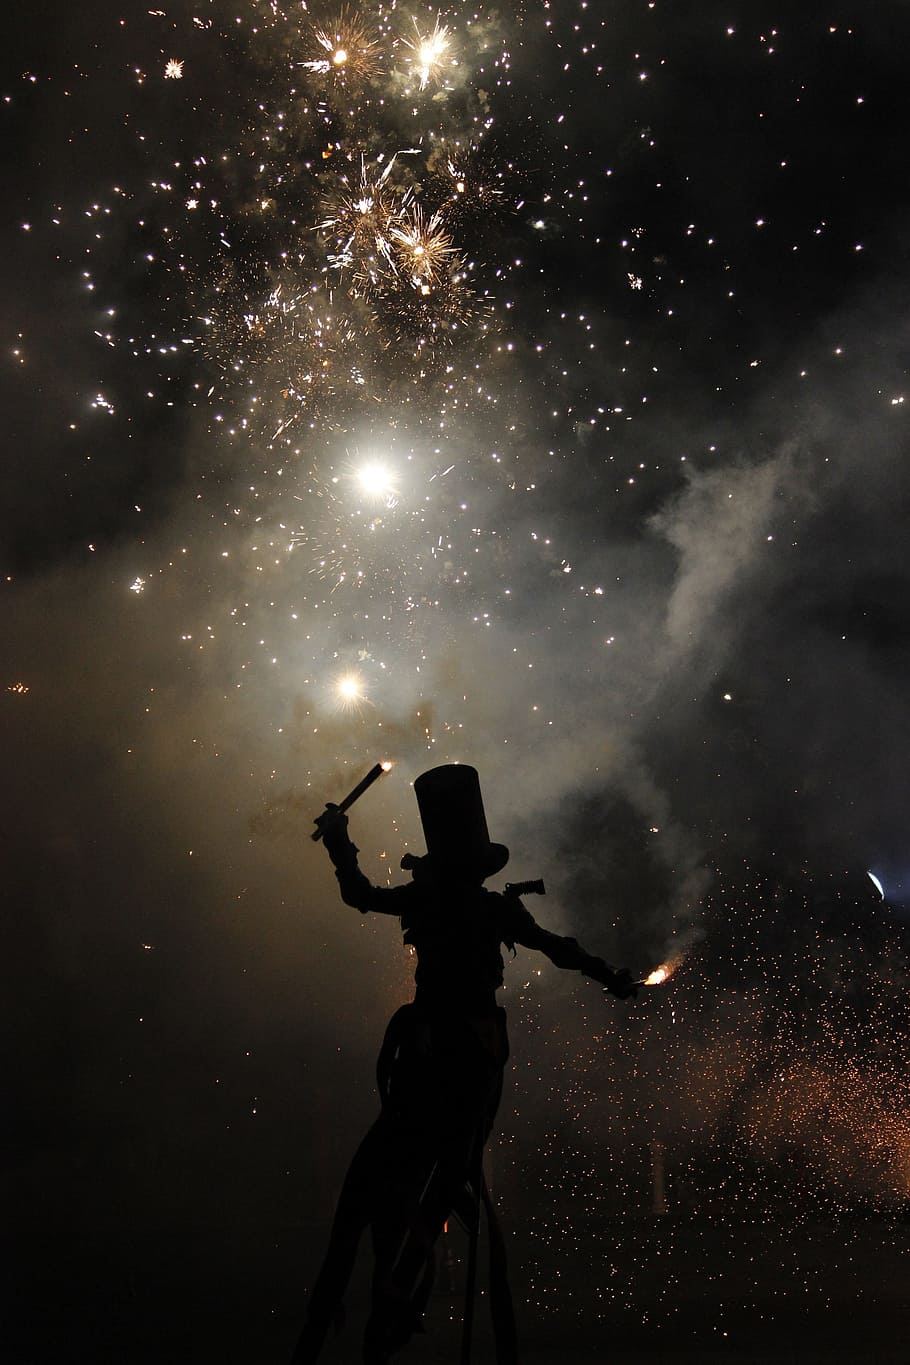 Fireworks, Explosion, Firecracker, flares, stilts, fireworks pyrotechnic, star - Space, astronomy, night, galaxy